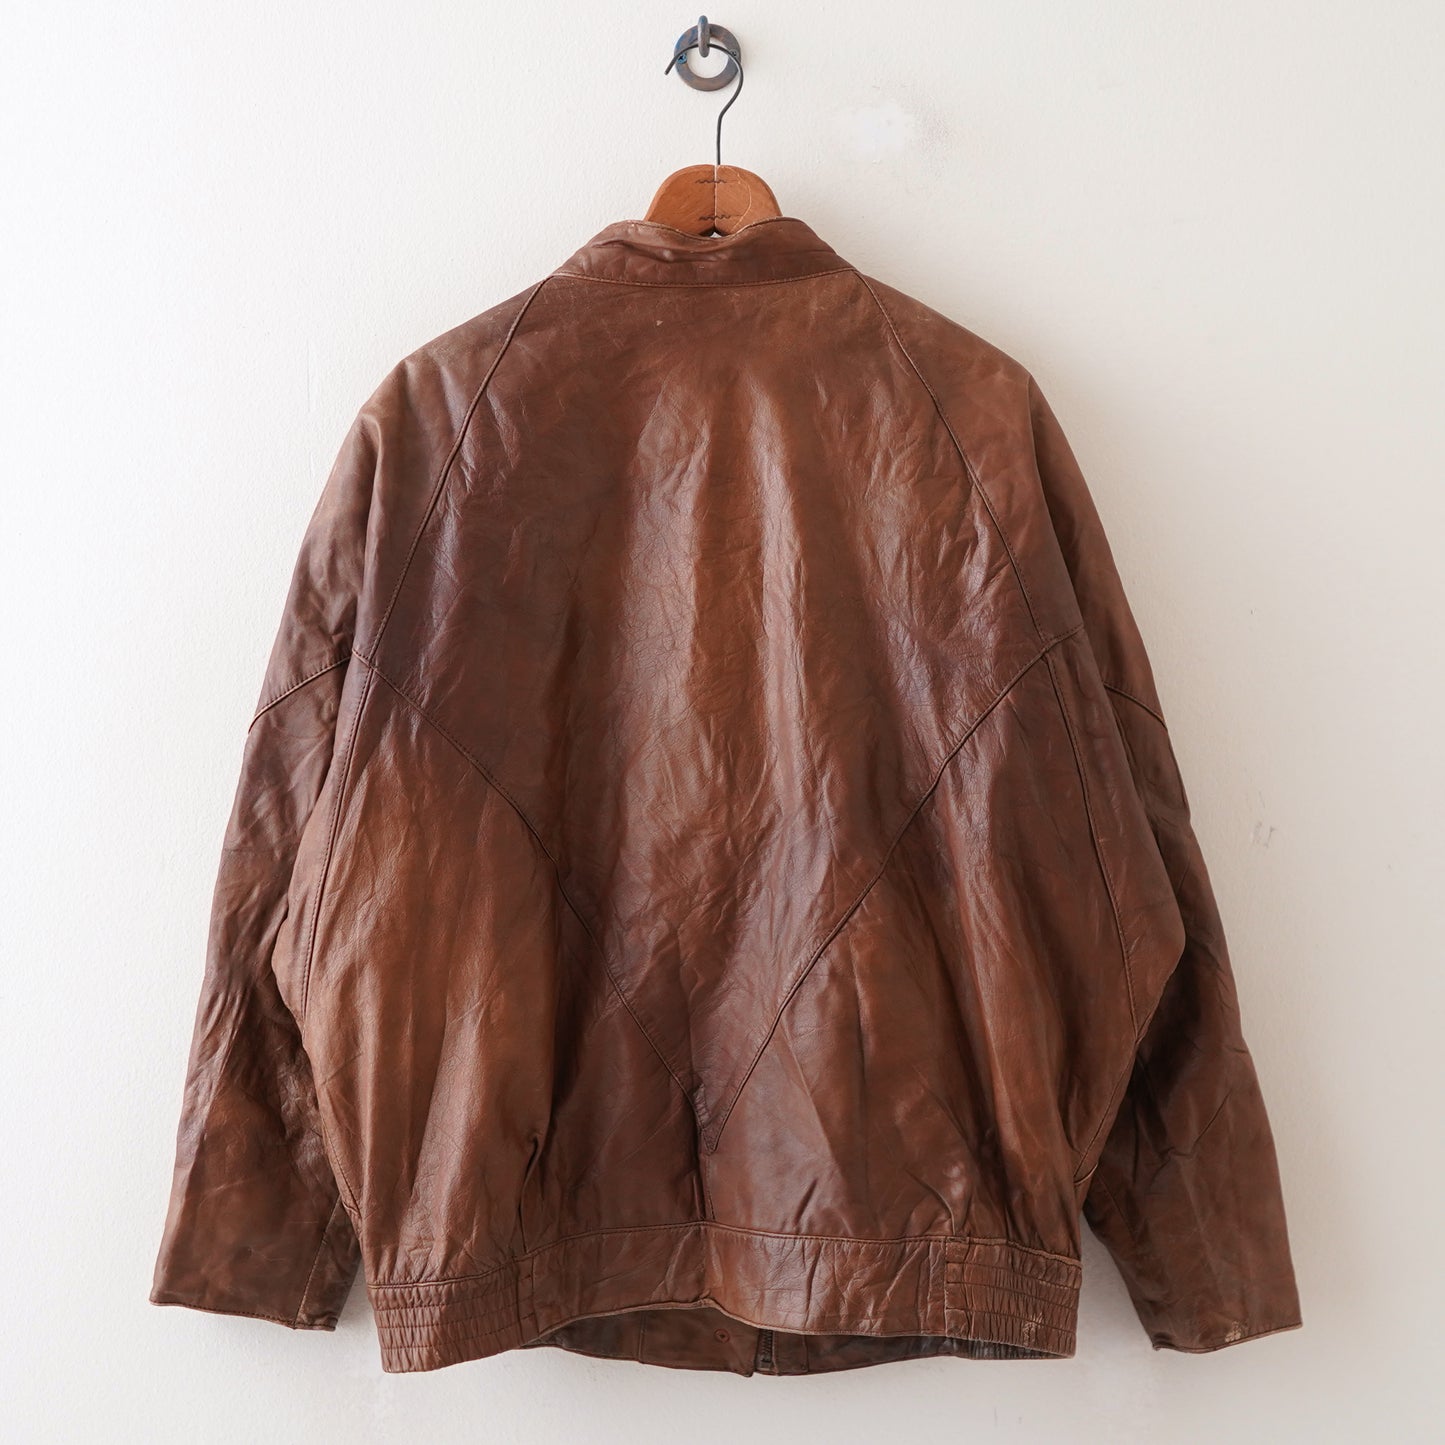 JANBELL leather jacket